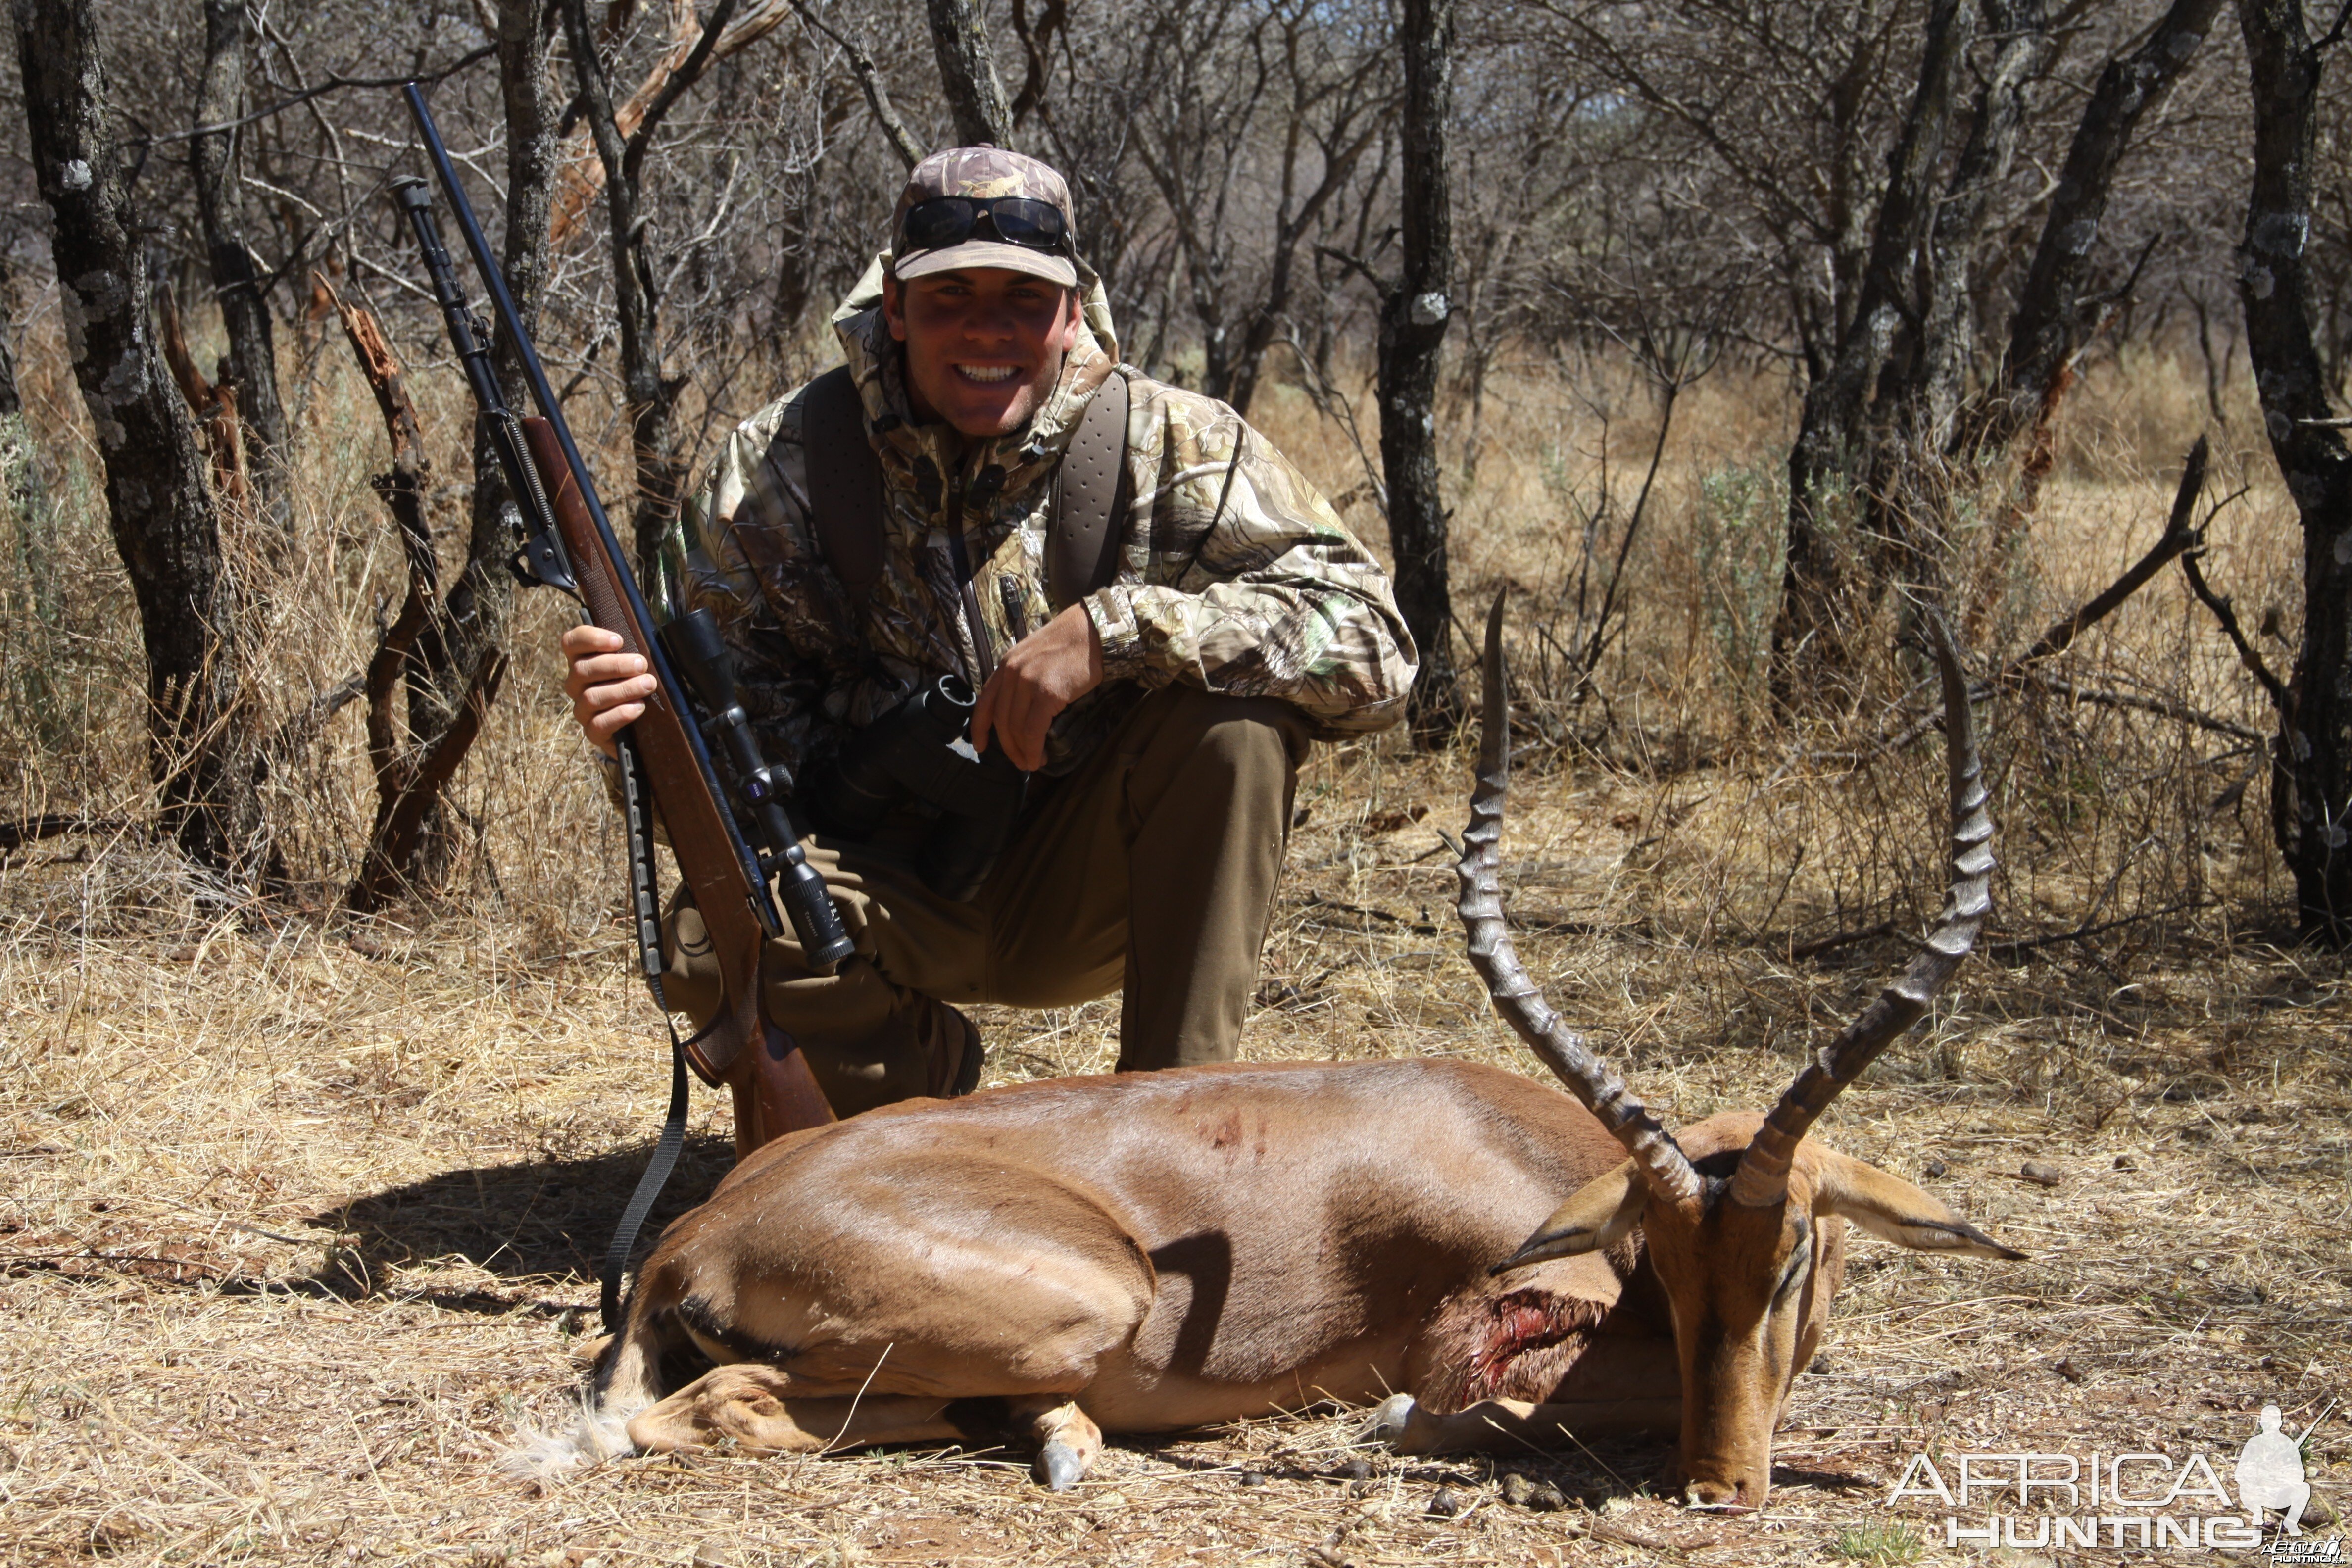 Impala hunted with Ozondjahe Hunting Safaris in Namibia